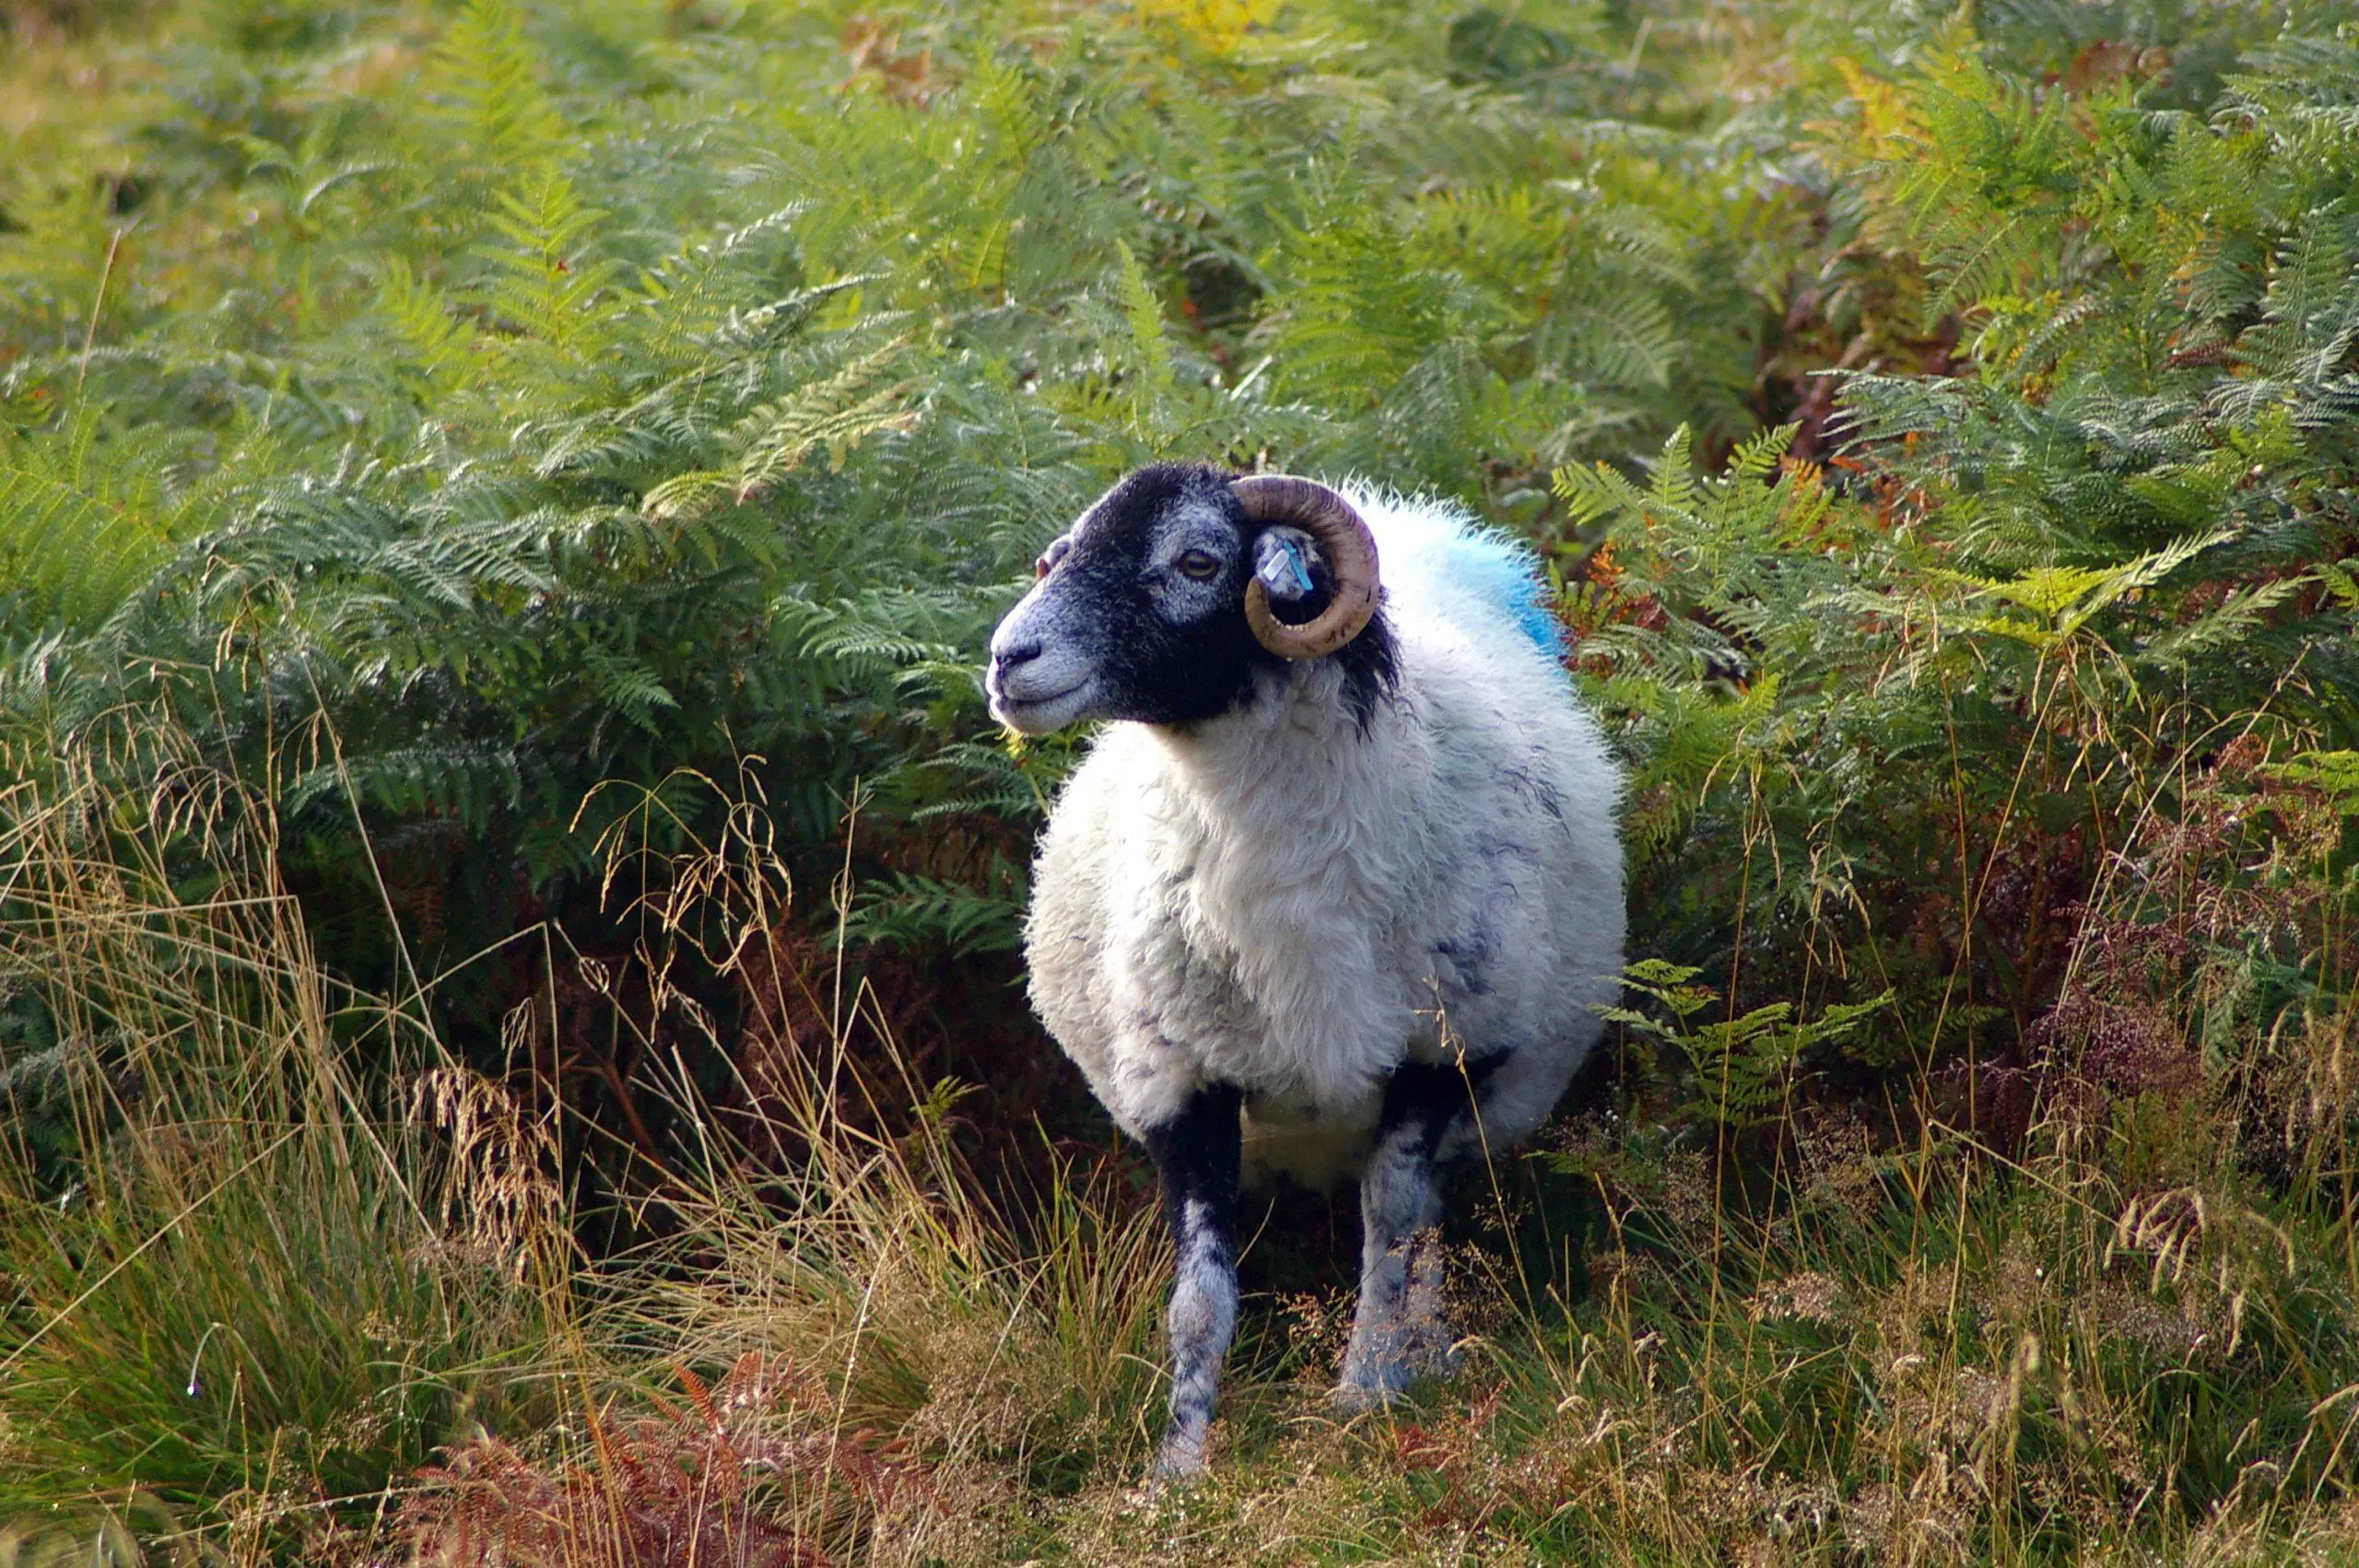 Sheep grazing amongst ferns on the moor